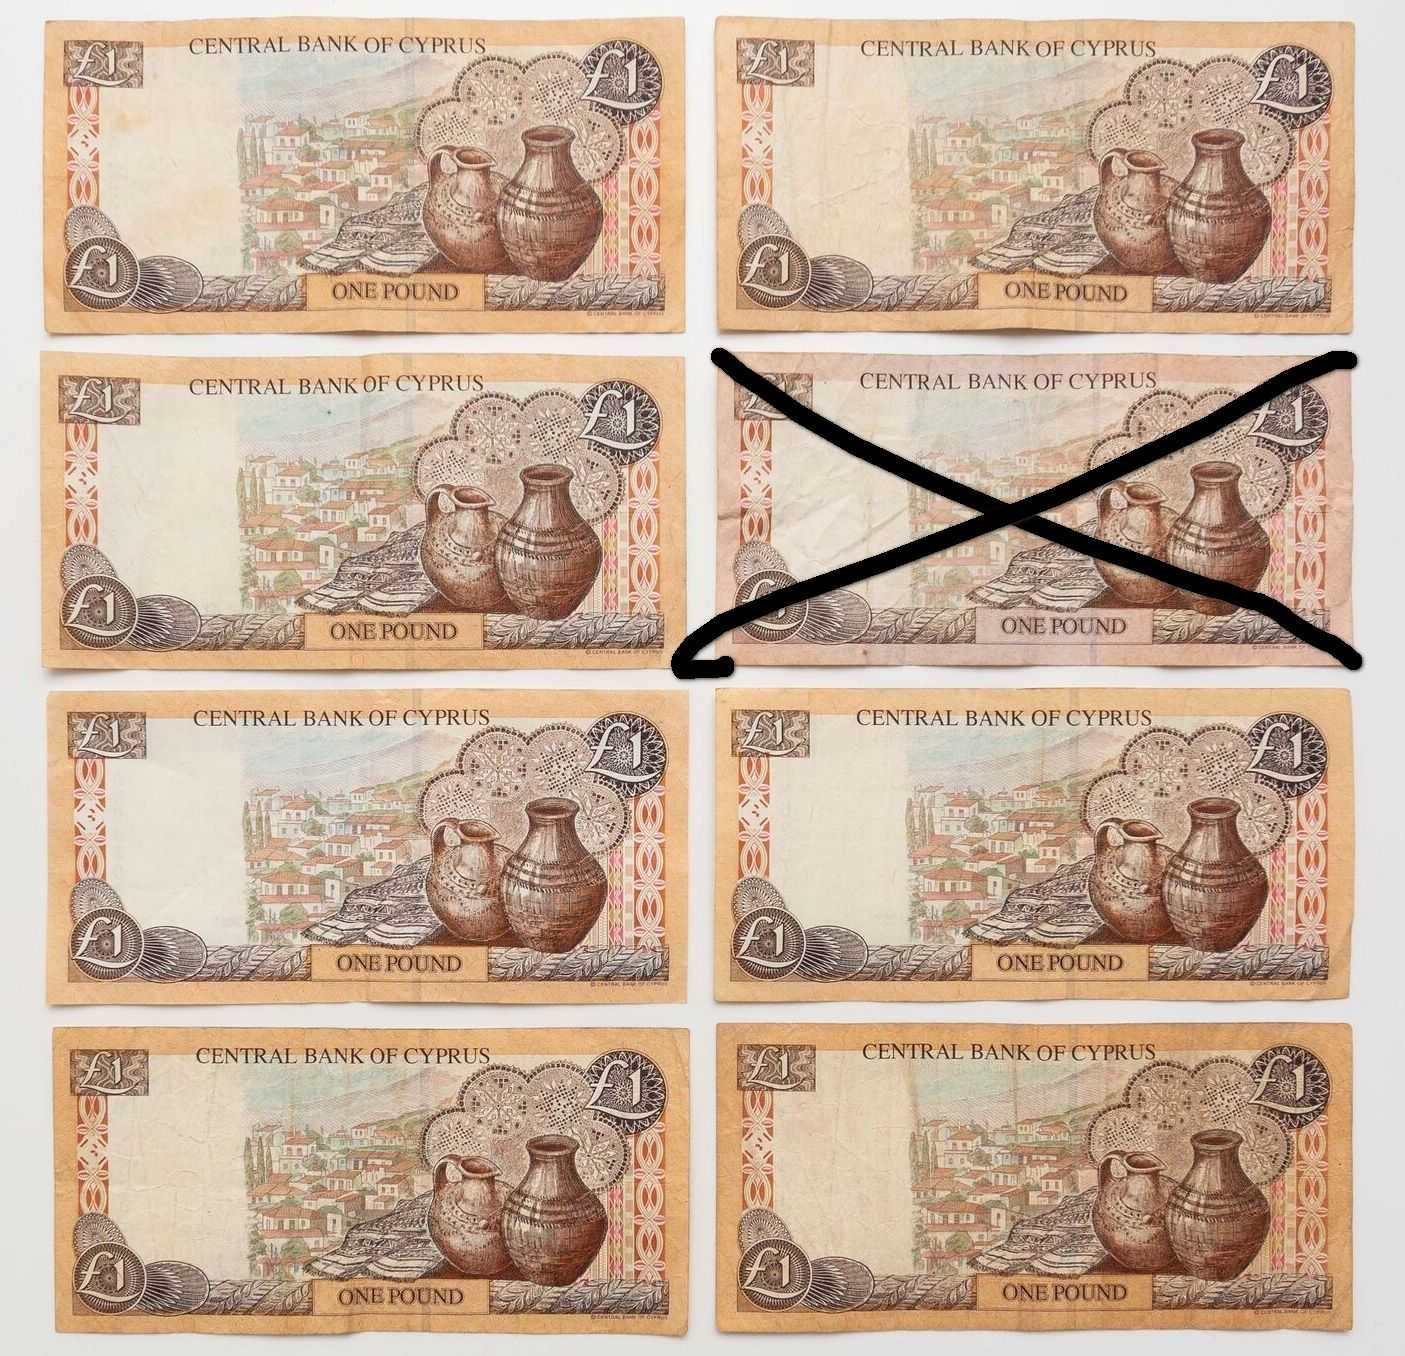 Banknot Cypr 1 funt cypryjski, zestaw 7 szt.